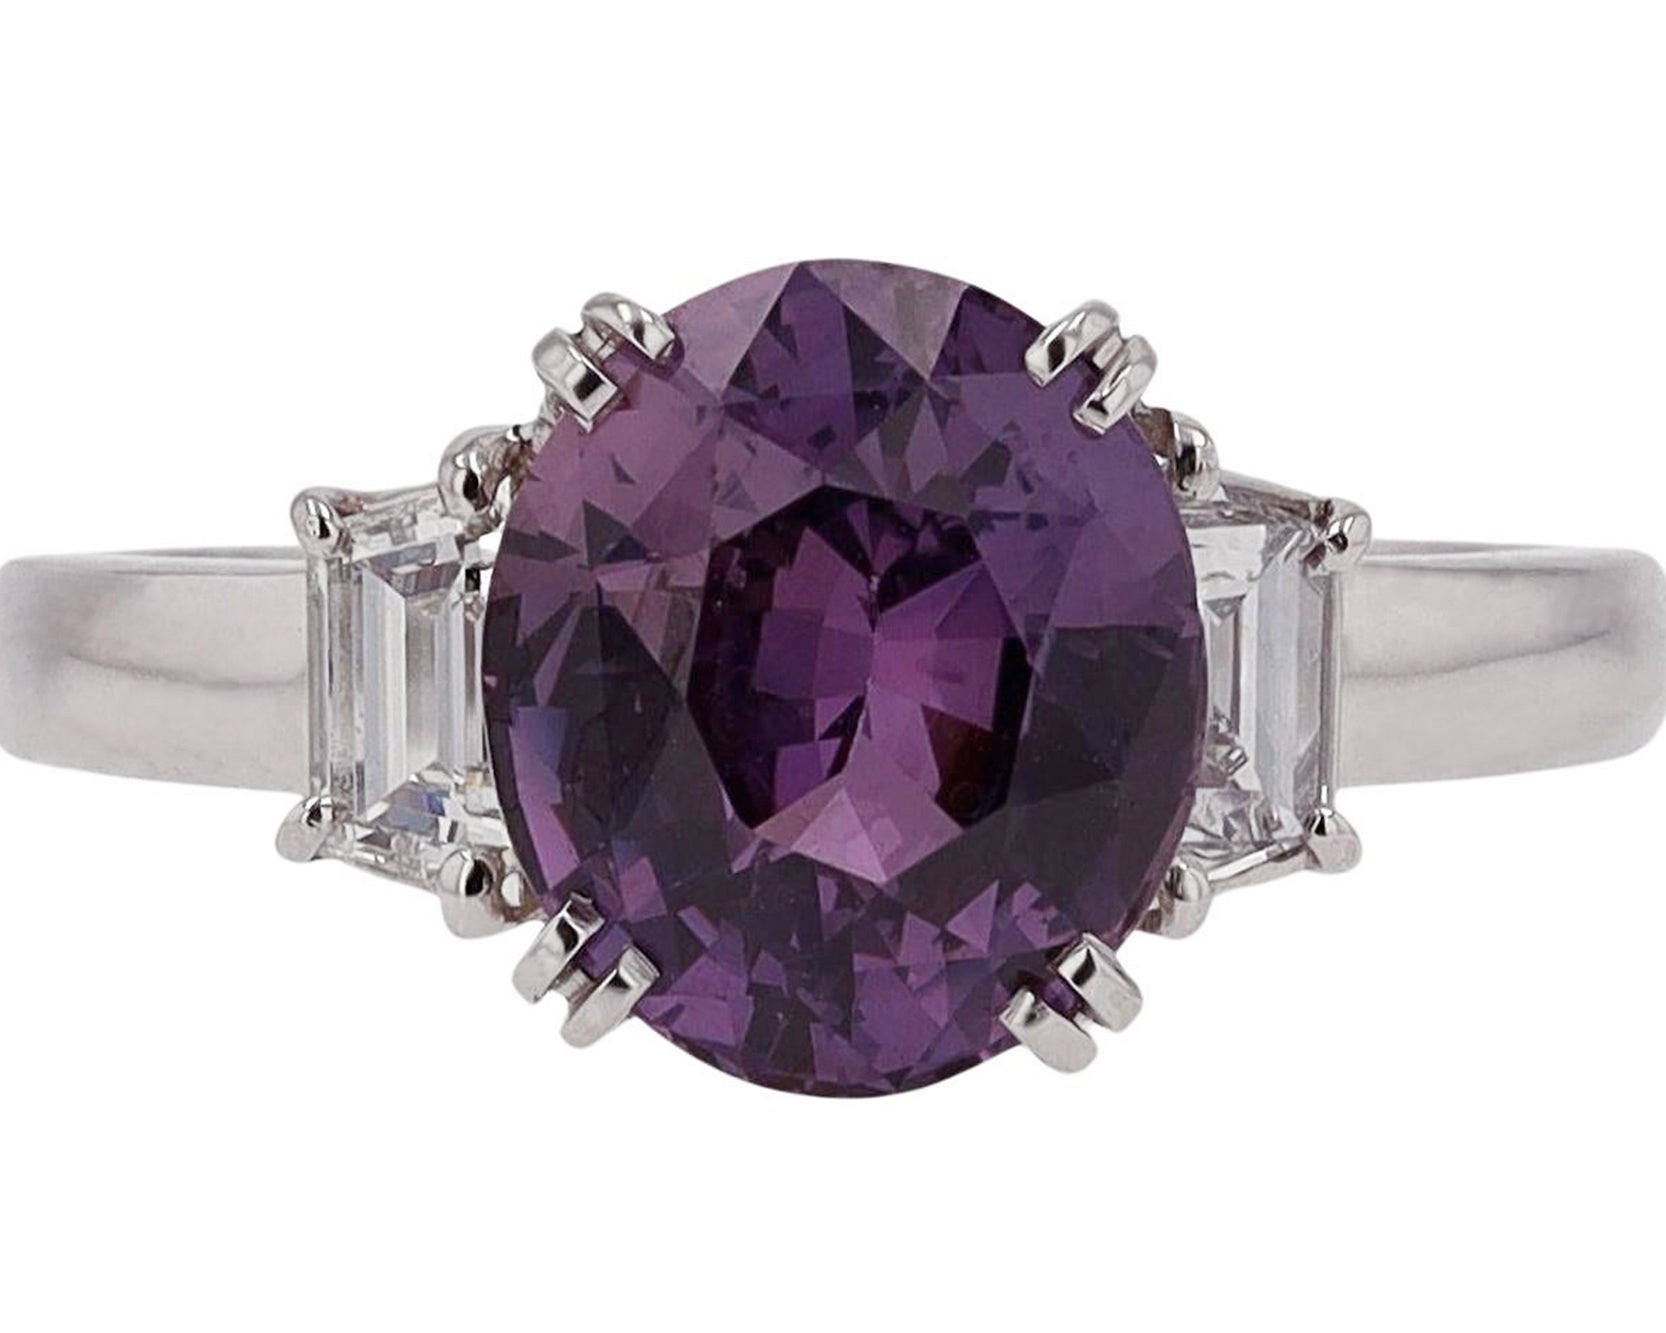 Three carat oval purple sapphire diamond 3 stone engagement ring.